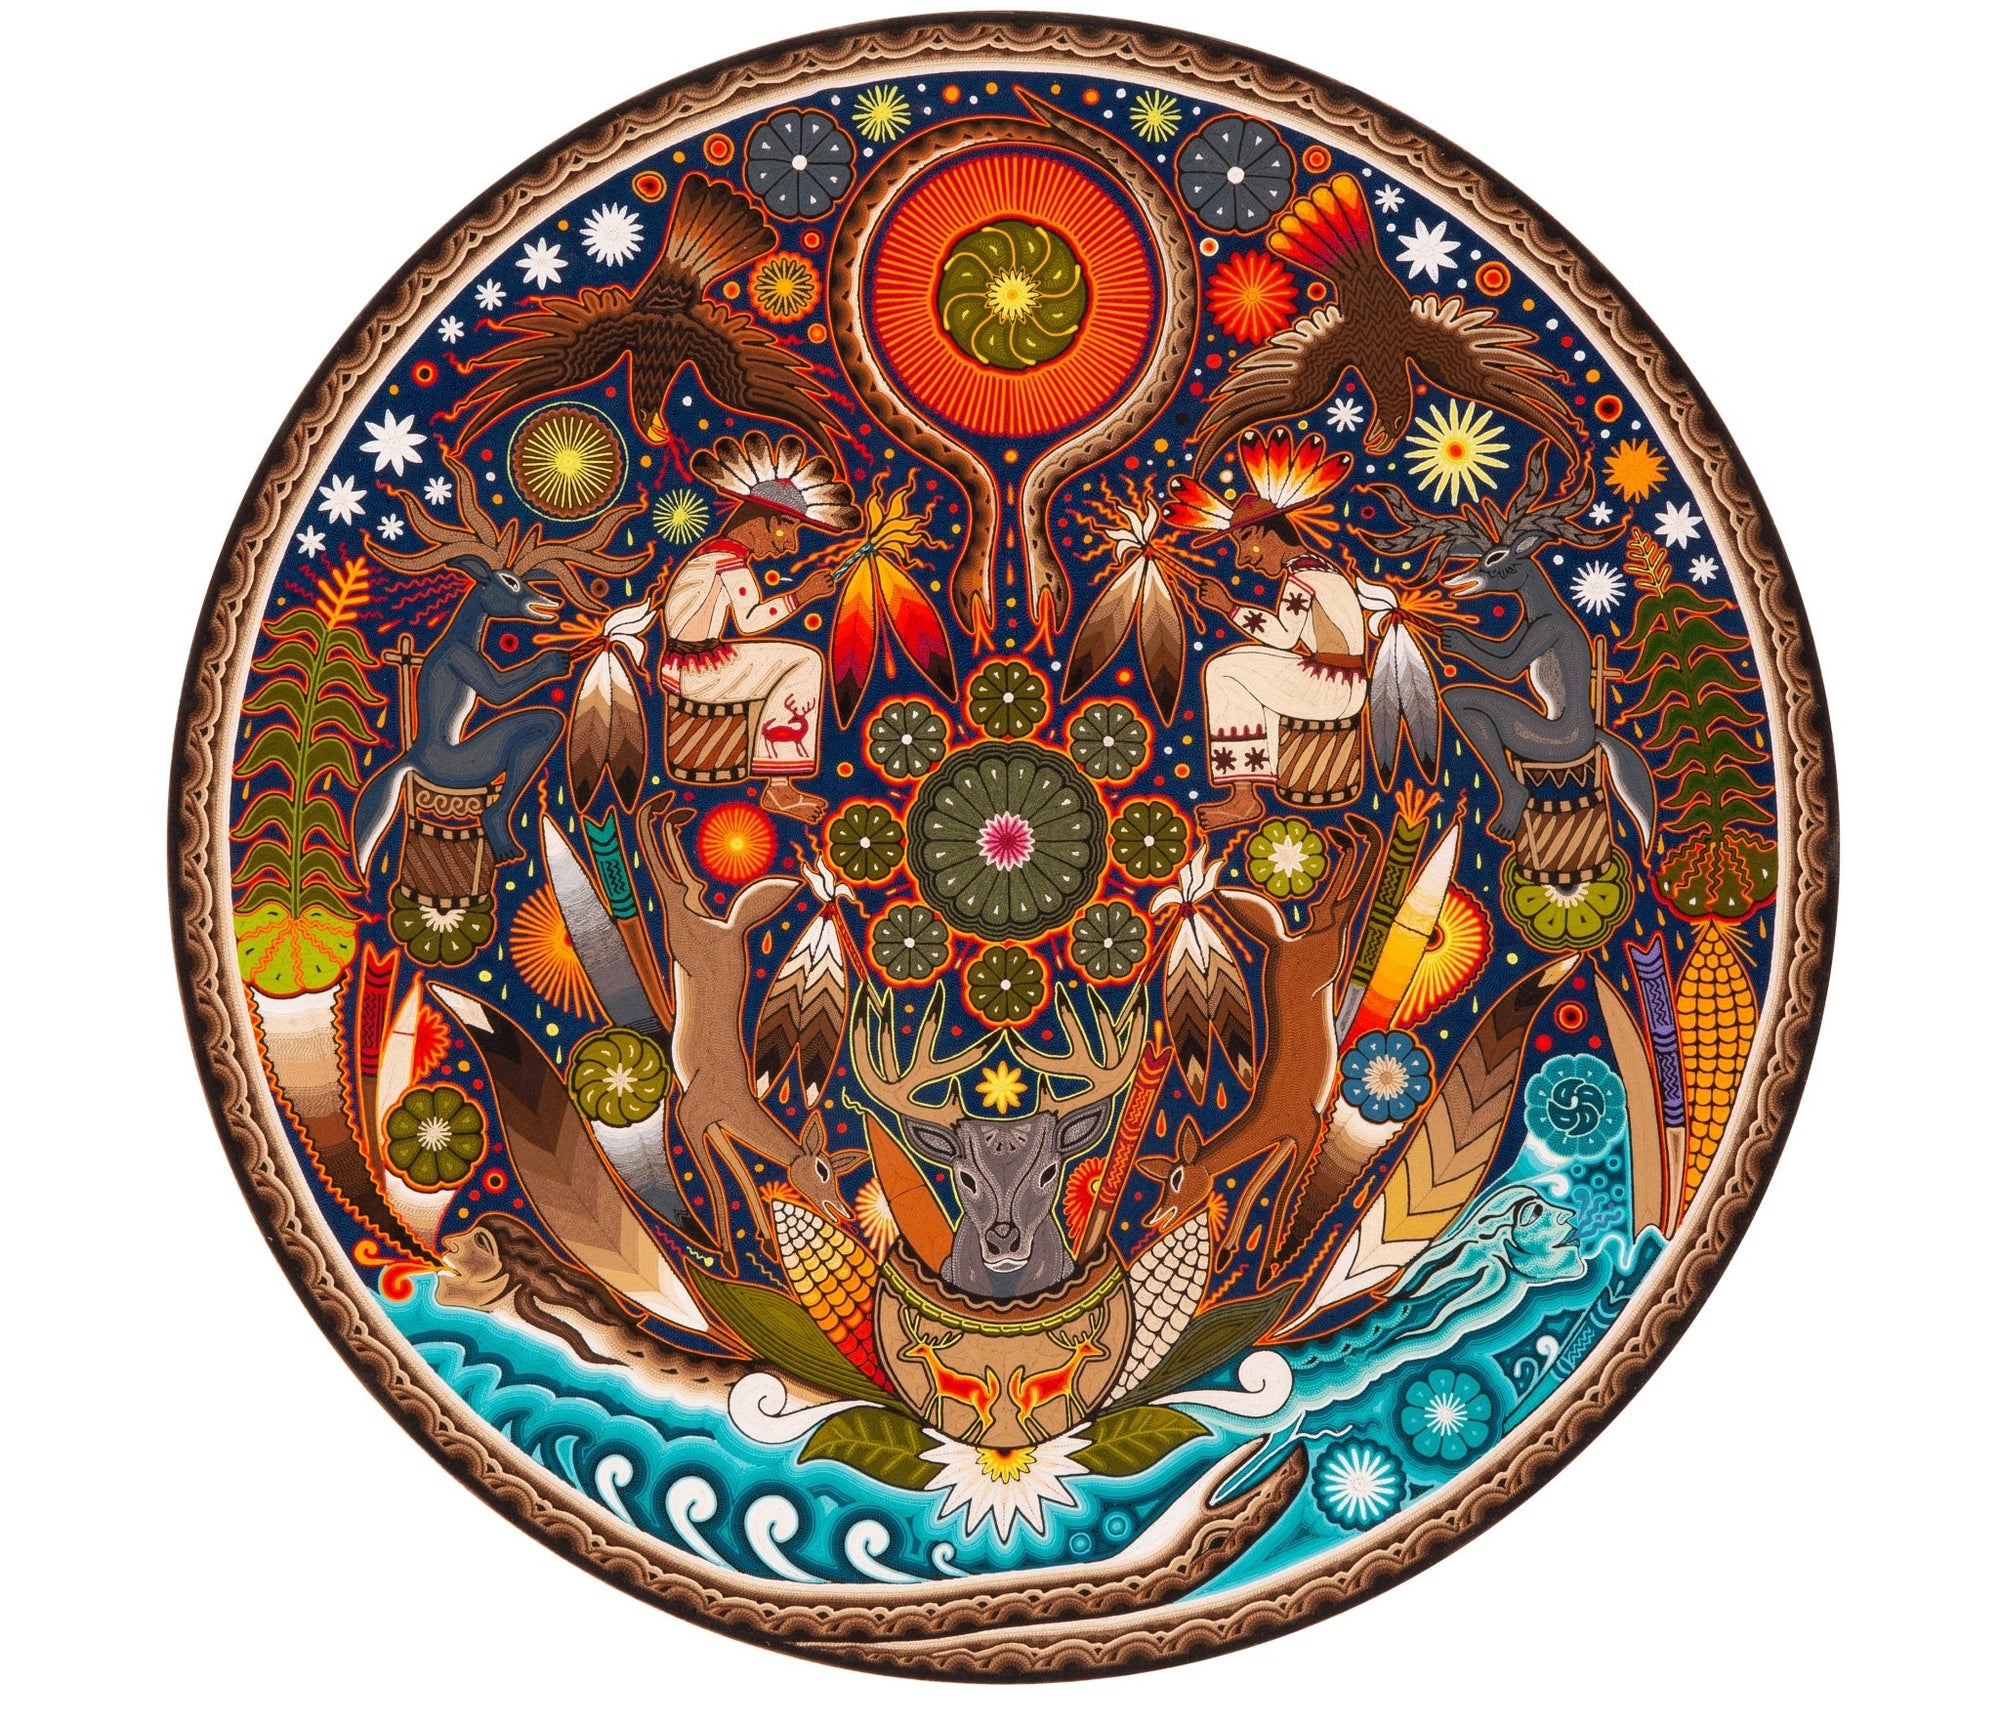 The song of the mara'akame - 45 x 45 cm. - 18 x 18 in. - Huichol Art - Marakame